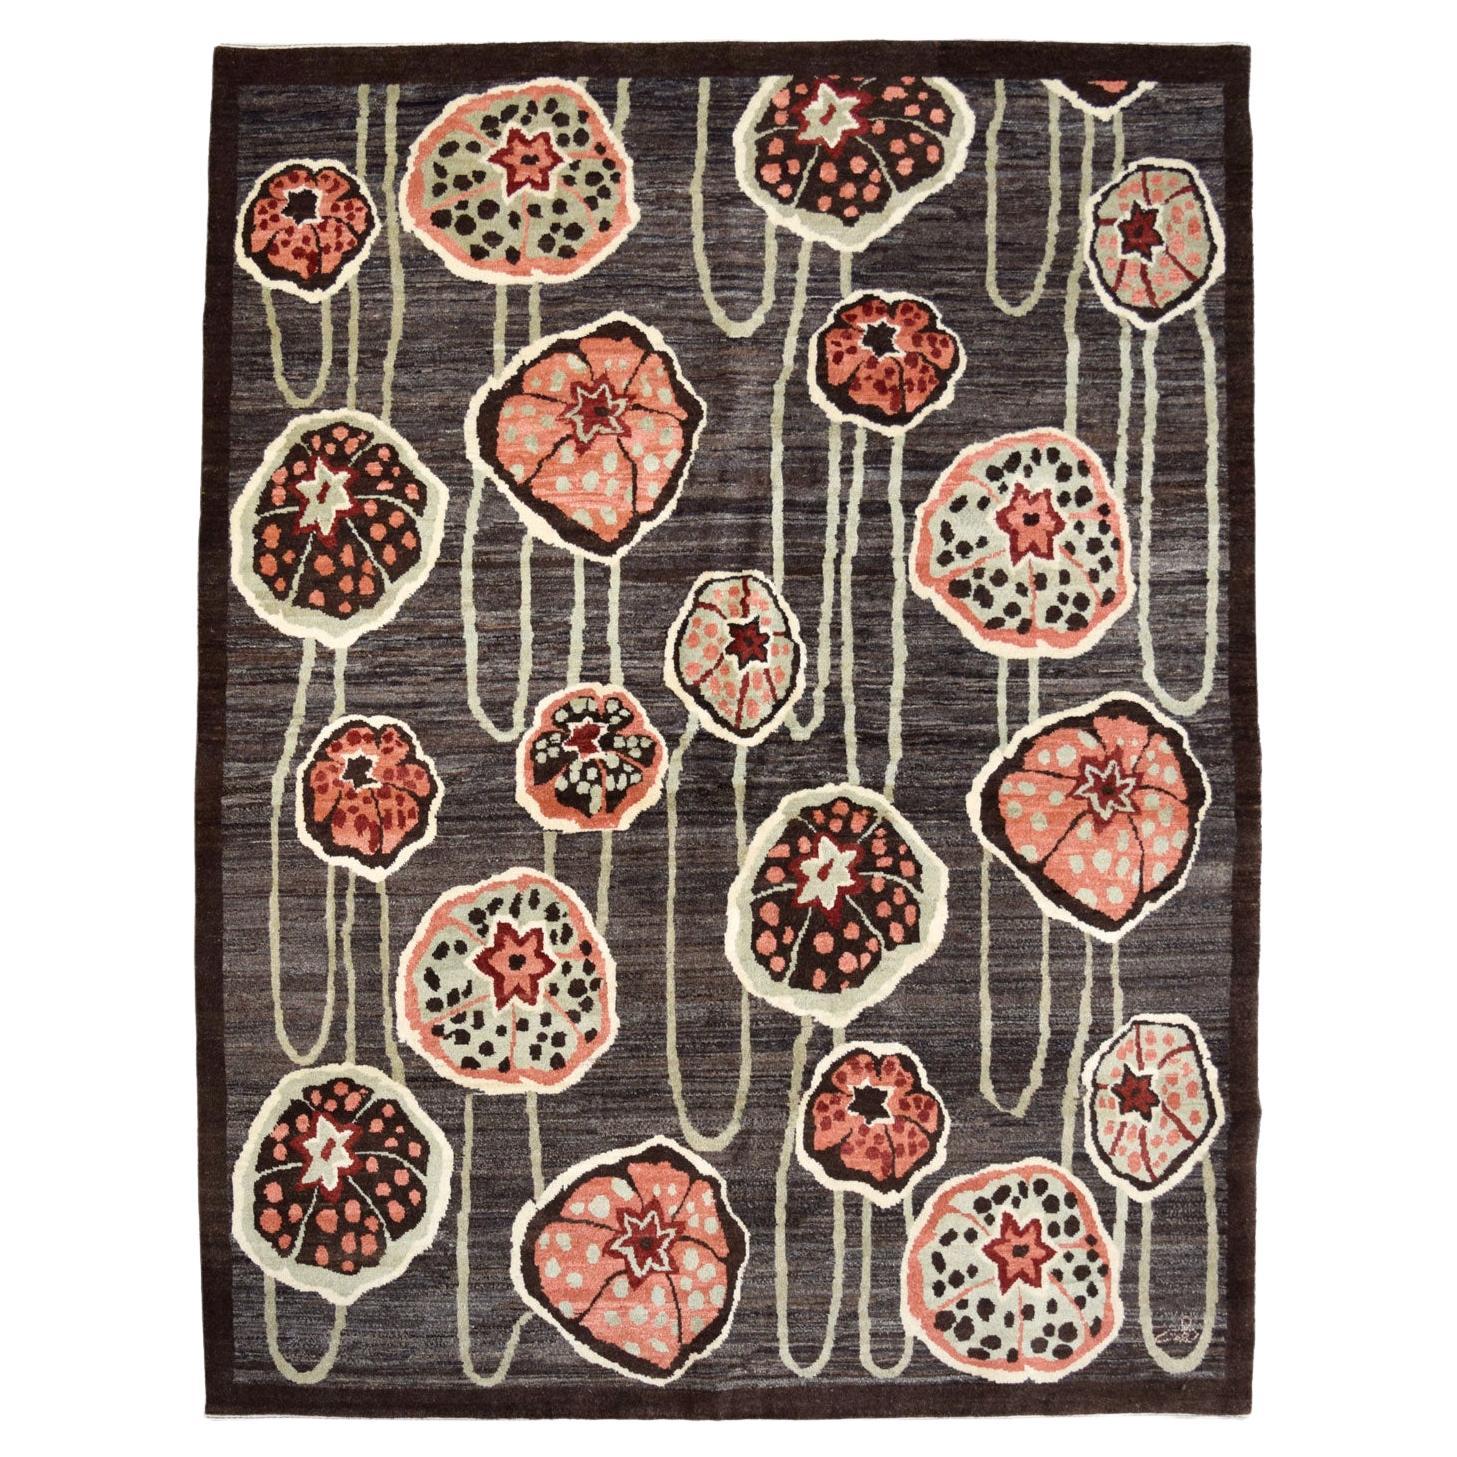 Wool Art Deco Persian Rug, Cream, Pink and Brown, 5’ x 7’